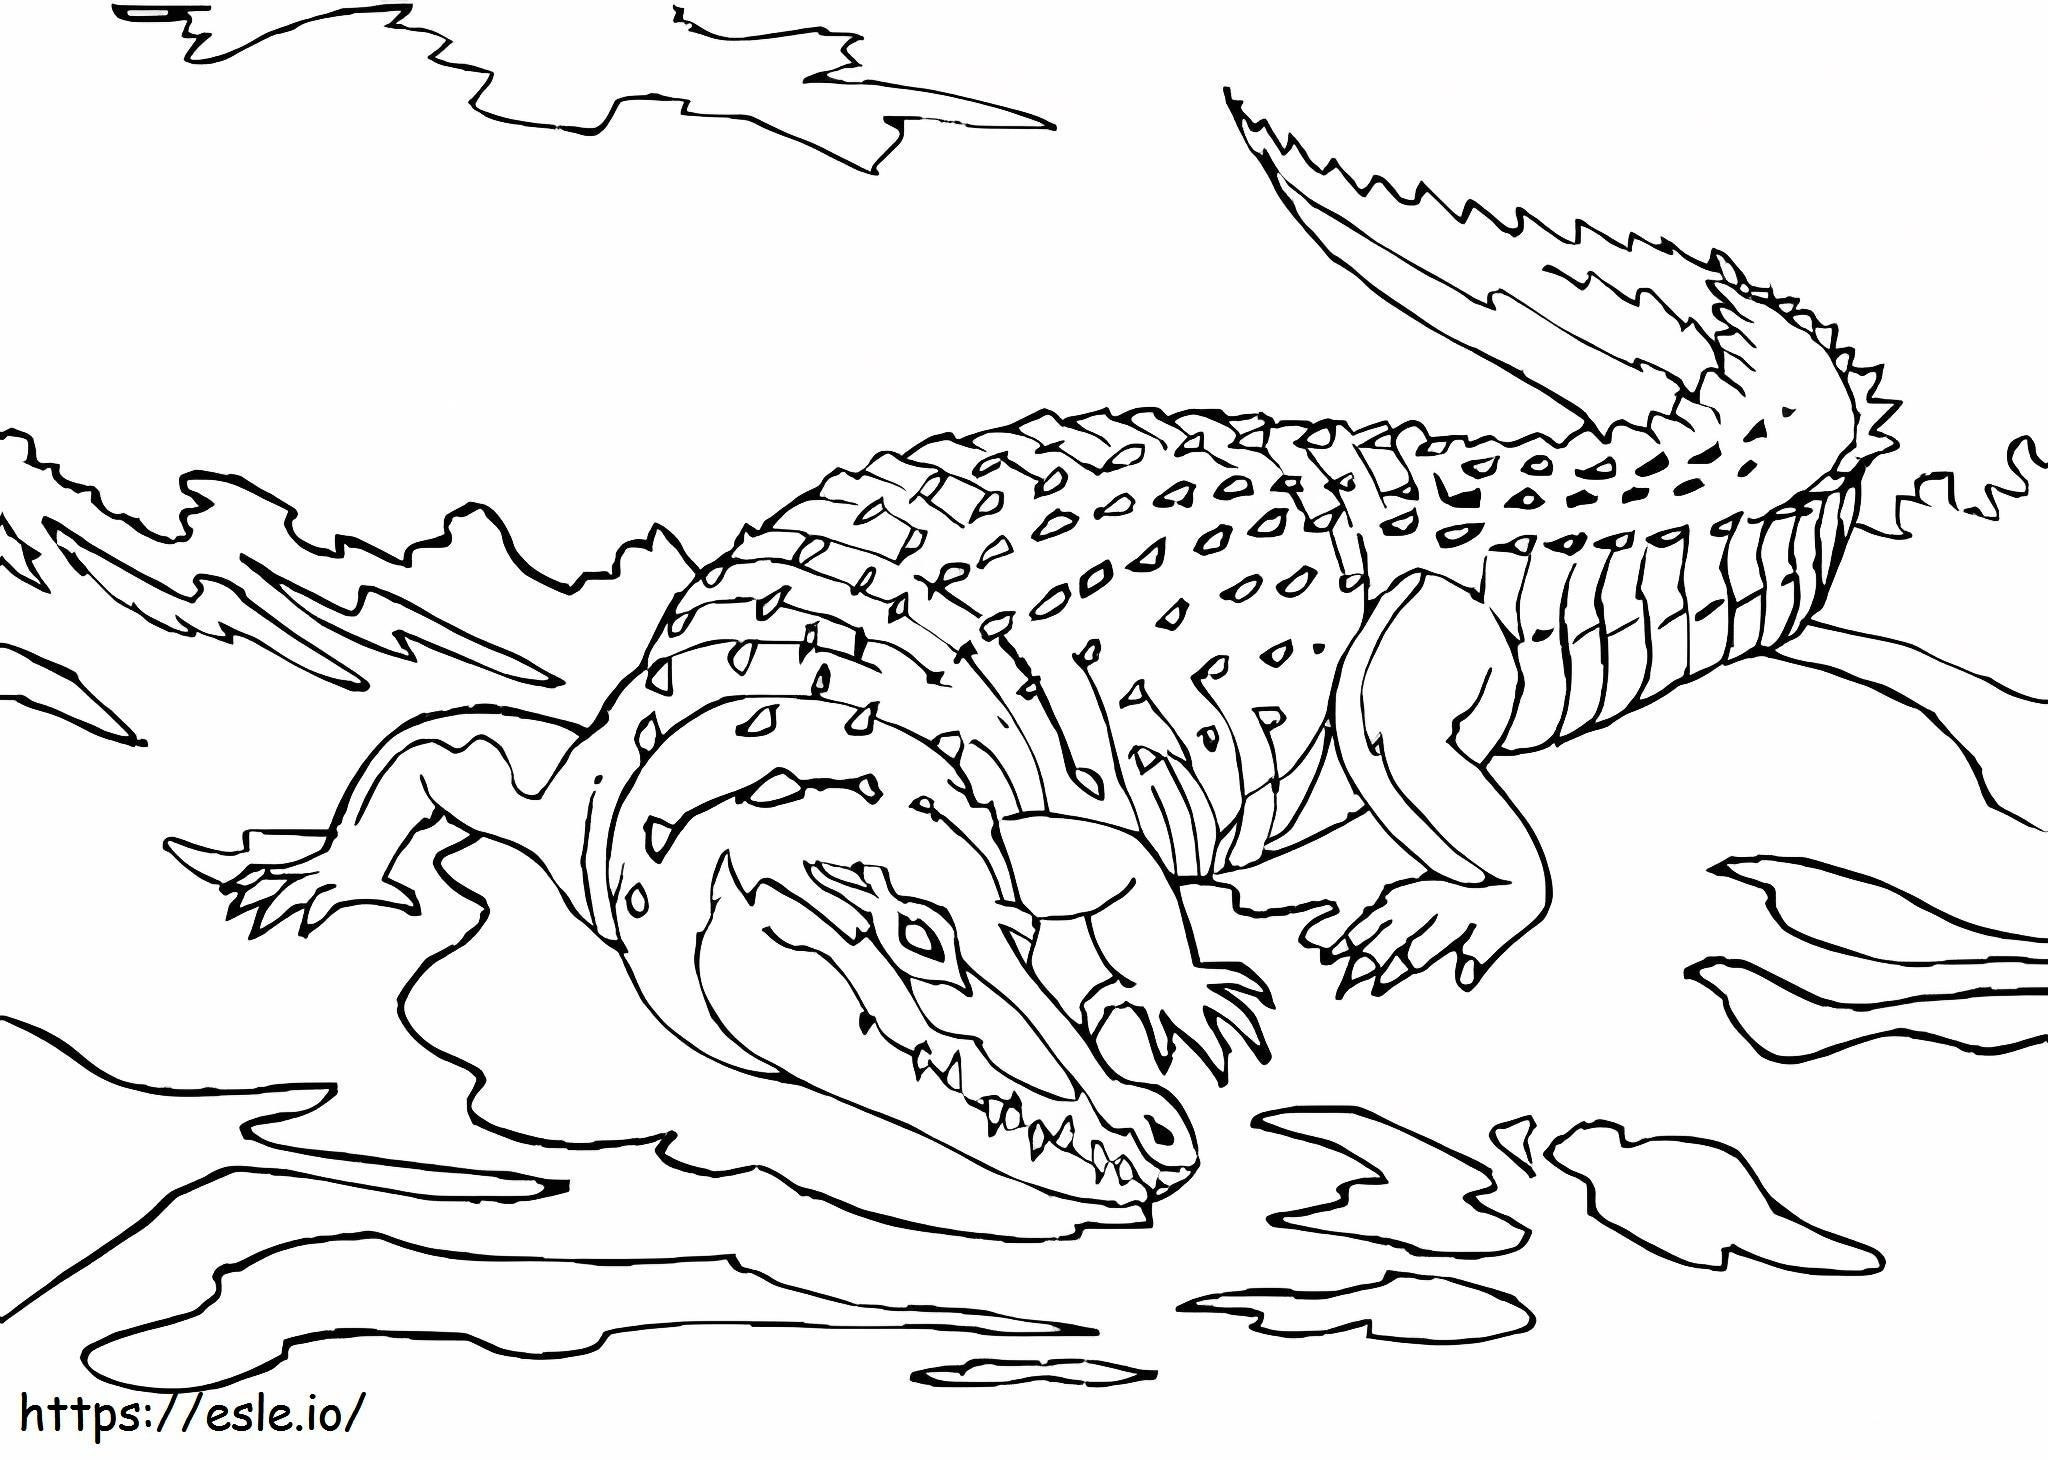 Großes Krokodil ausmalbilder